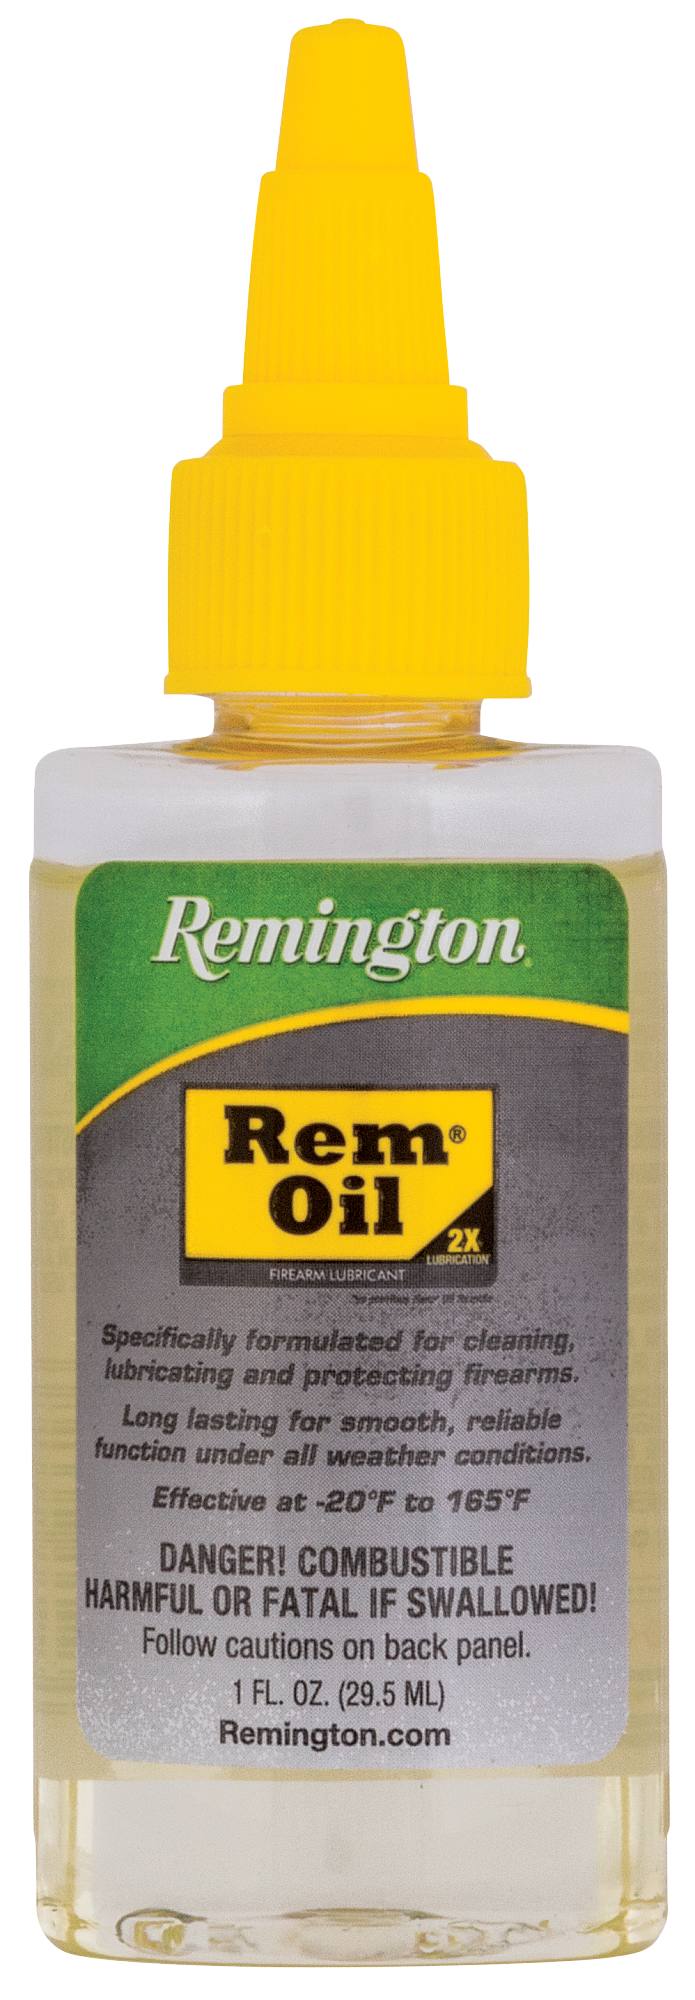 Buy Rem Oil Squeeze Bottle - 1oz for USD 3.79